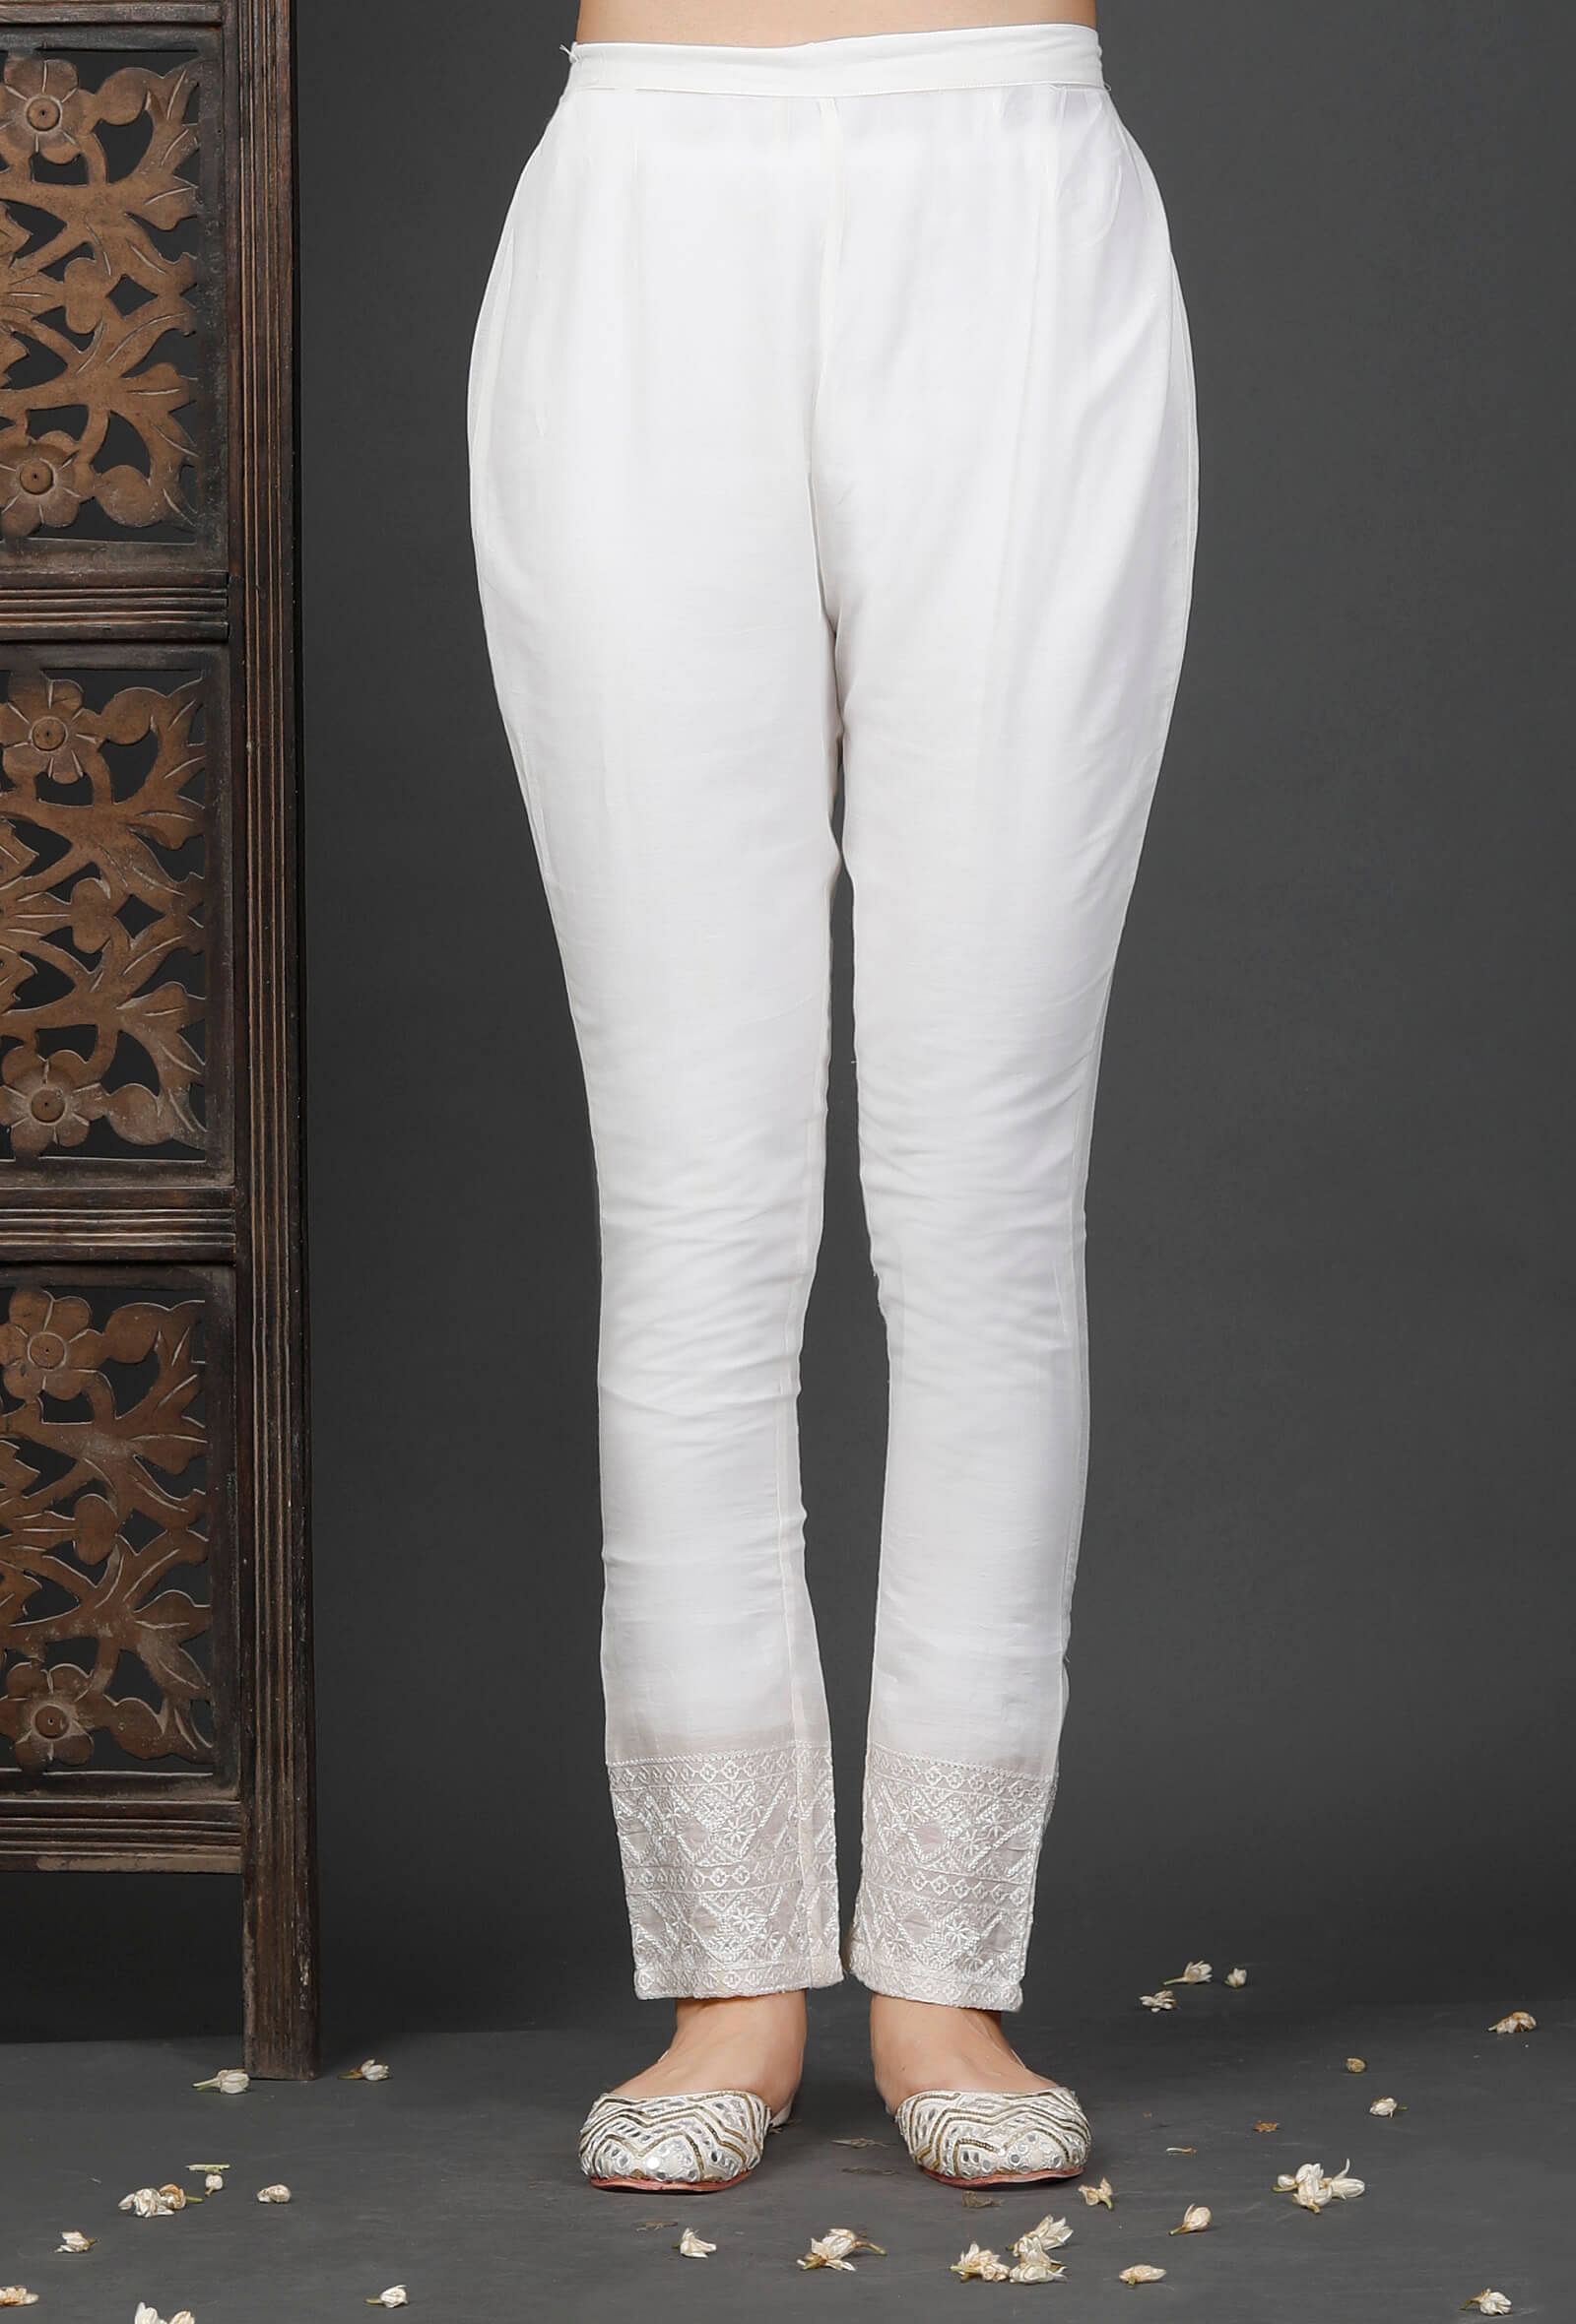 Cotton Silk Side Zip Pant | Buy Trouser Pants For Women